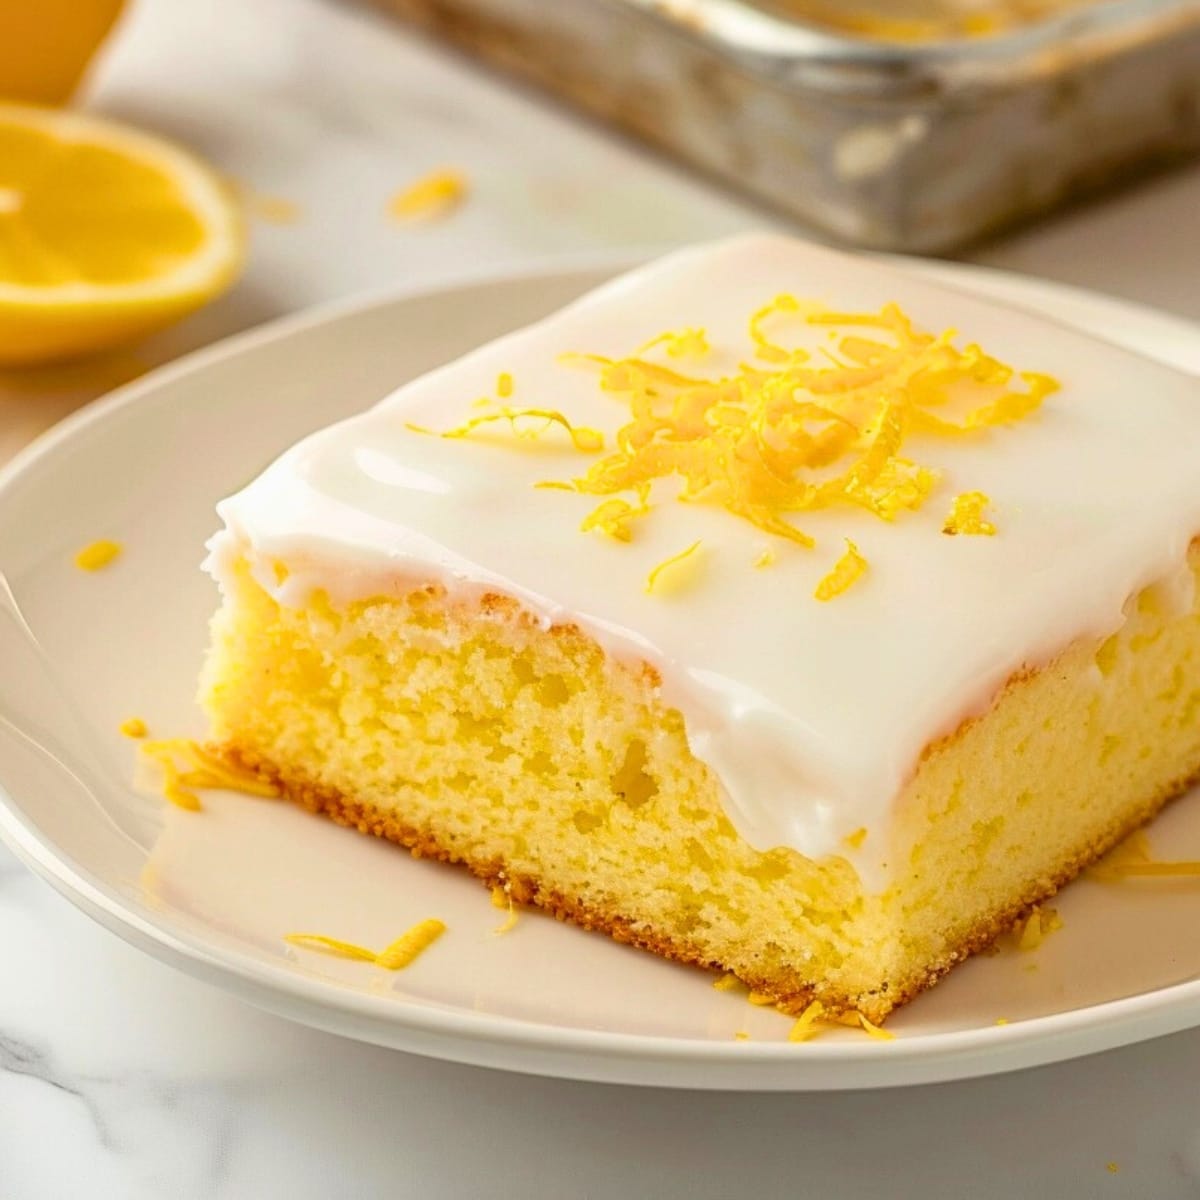 A slice of lemon sheet cake with sugar glaze garnished with lemon zest.